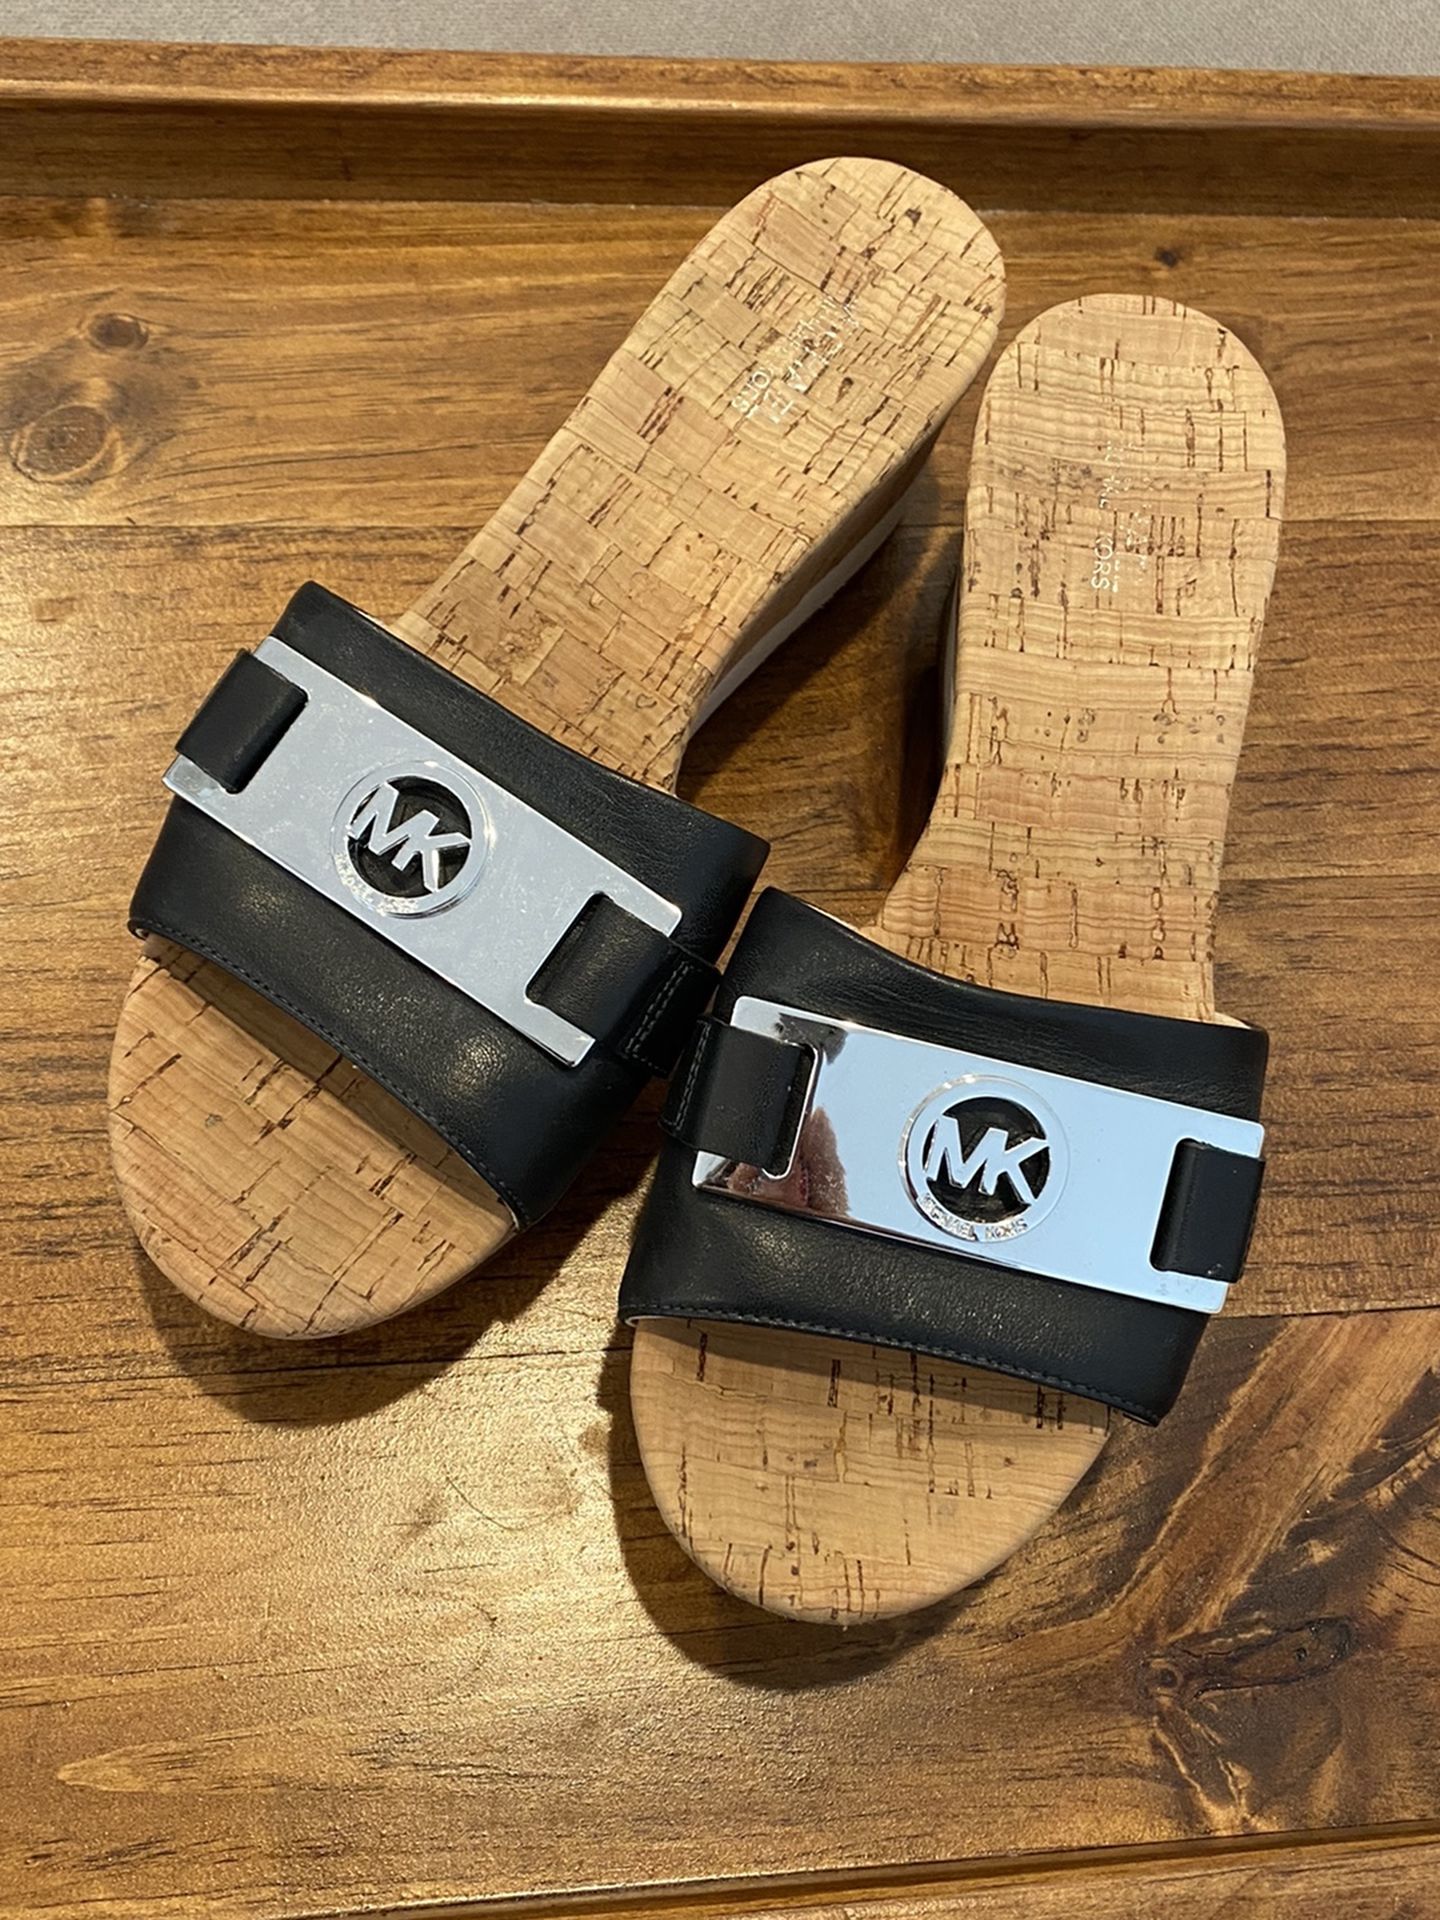 Michael Kors Wedge Sandal - size 6